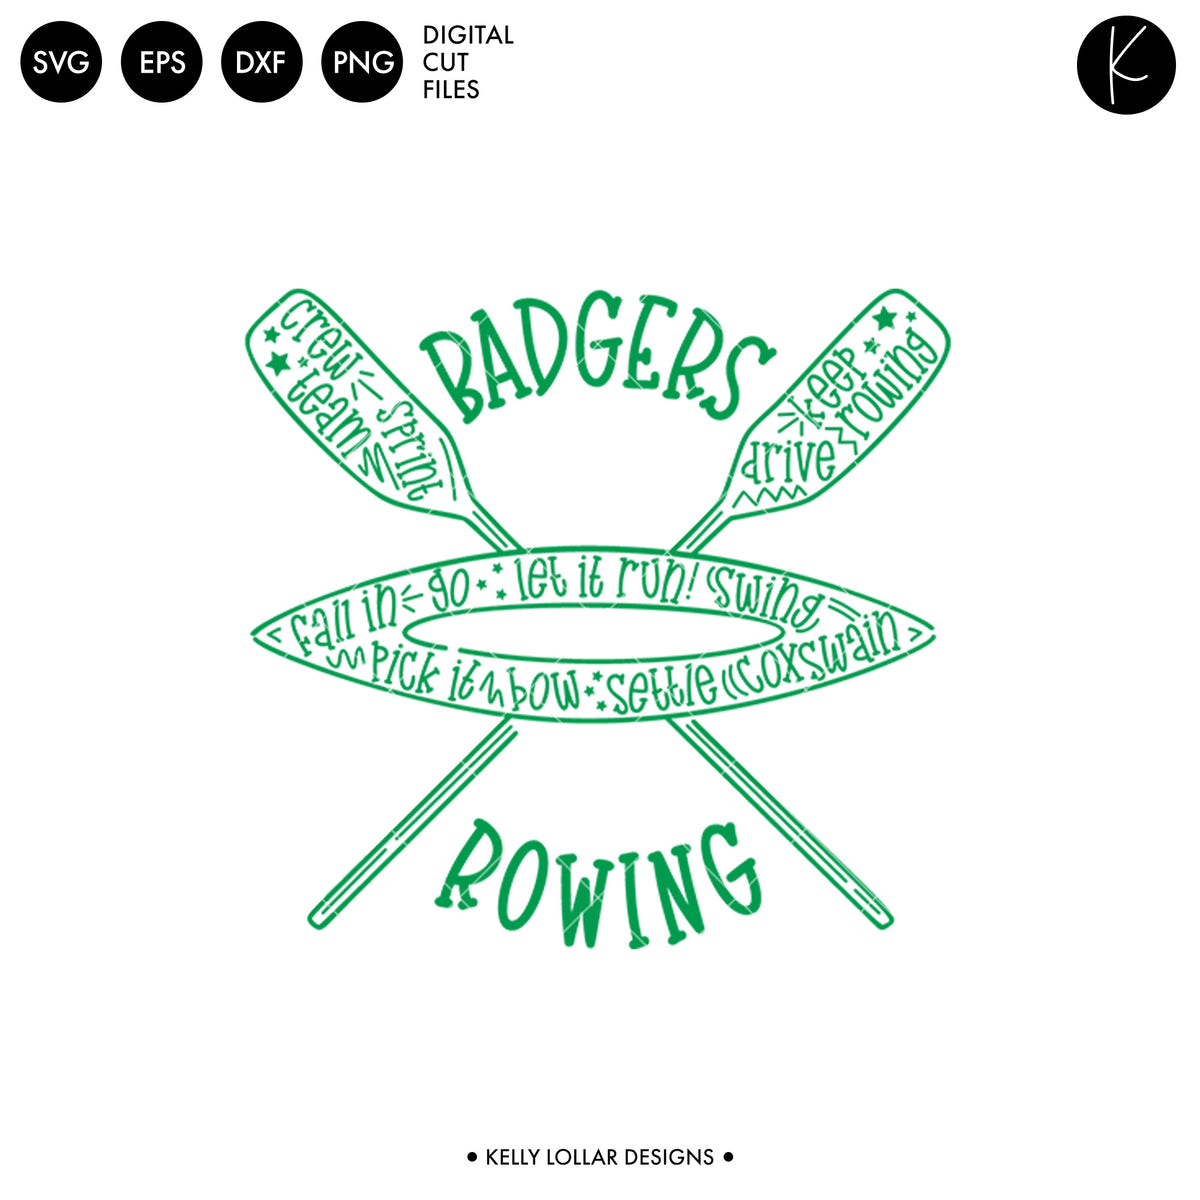 Badgers Rowing Crew Bundle | SVG DXF EPS PNG Cut Files